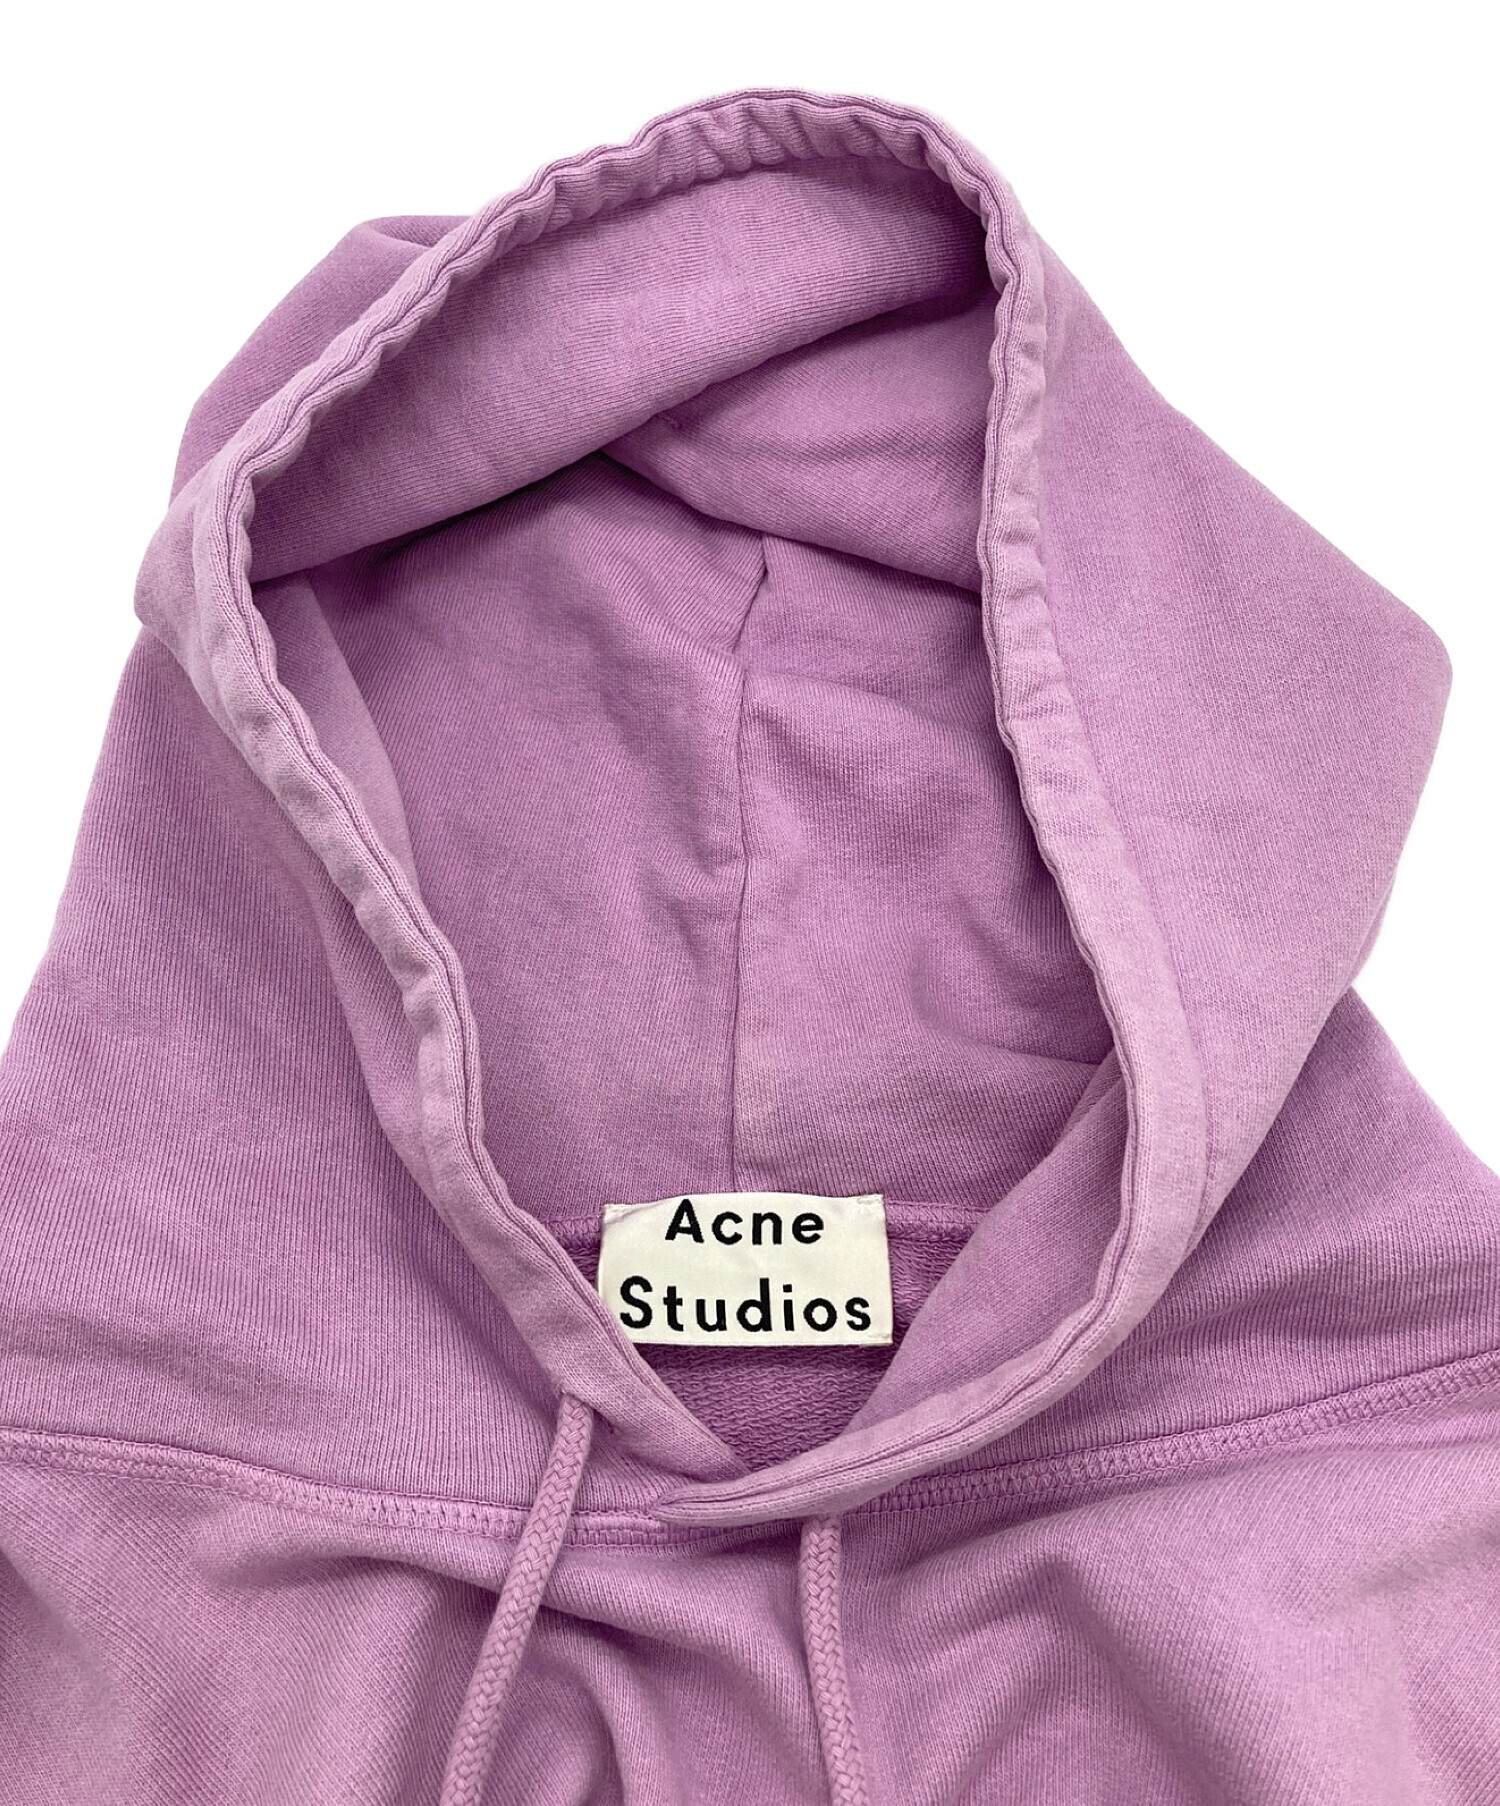 Acne studios (アクネストゥディオス) ショートパーカー ピンク サイズ:S